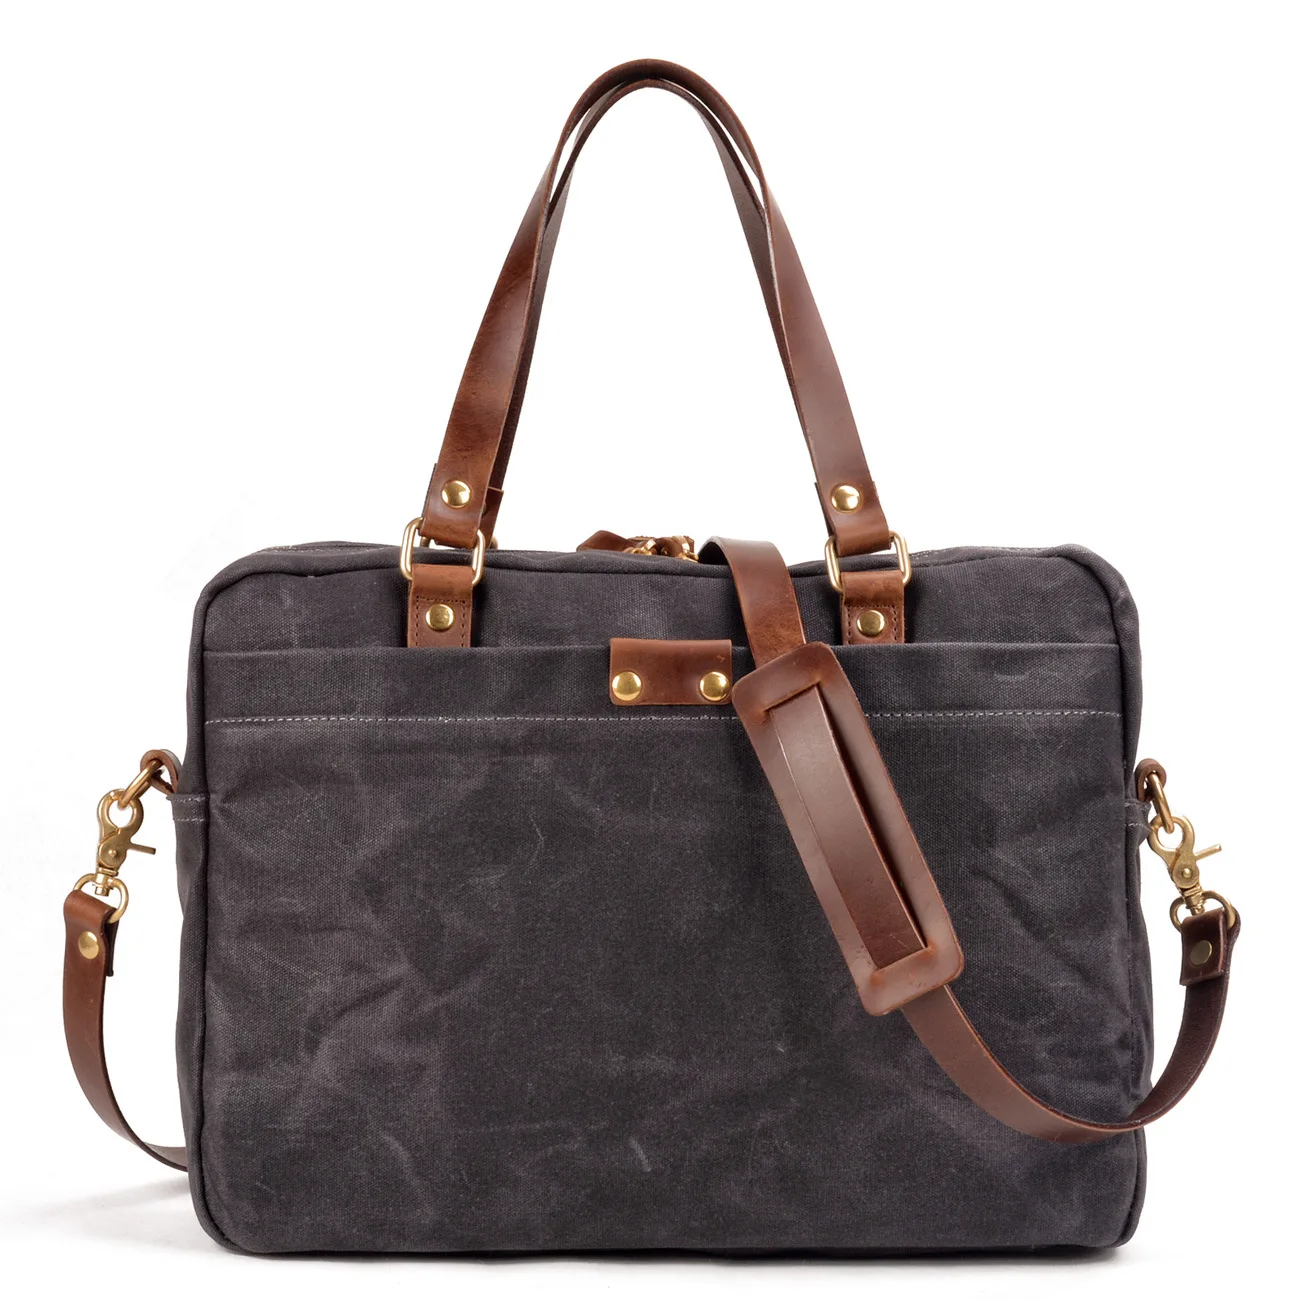 Men's bag wax canvas leather handbag business briefcase 15.6 inch computer file bag